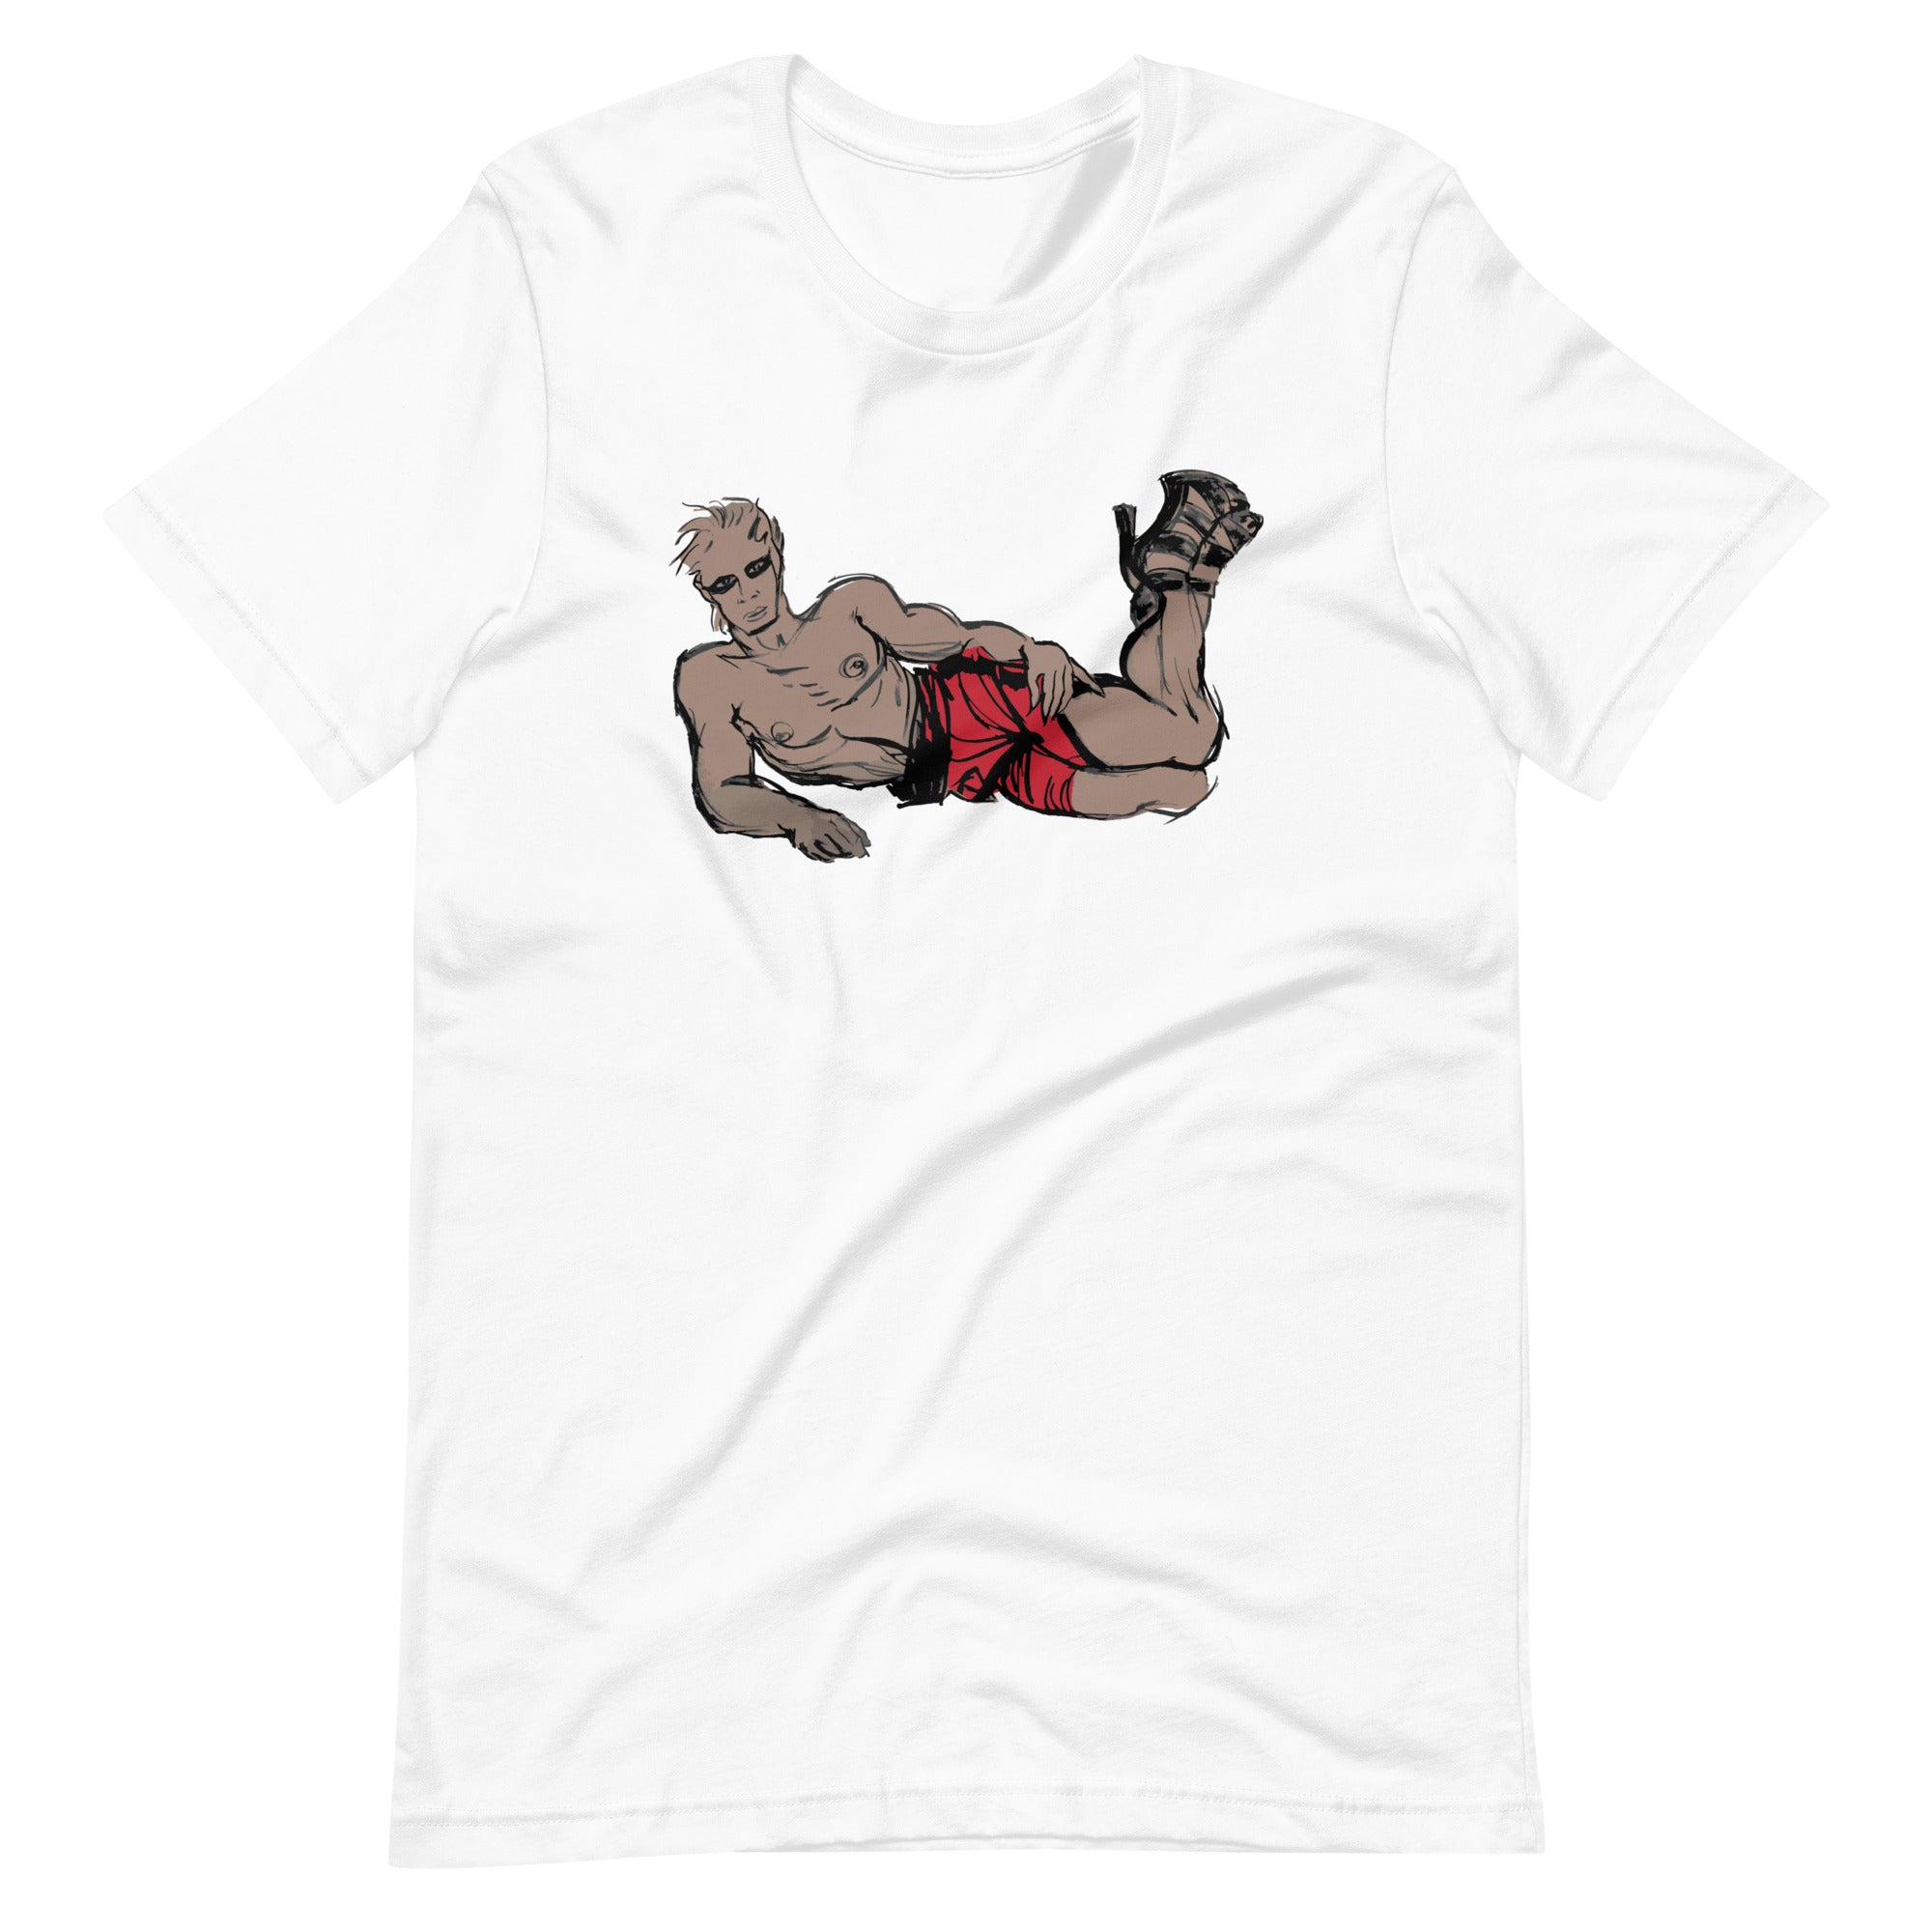 Boxing in Heels, Unisex T-Shirt